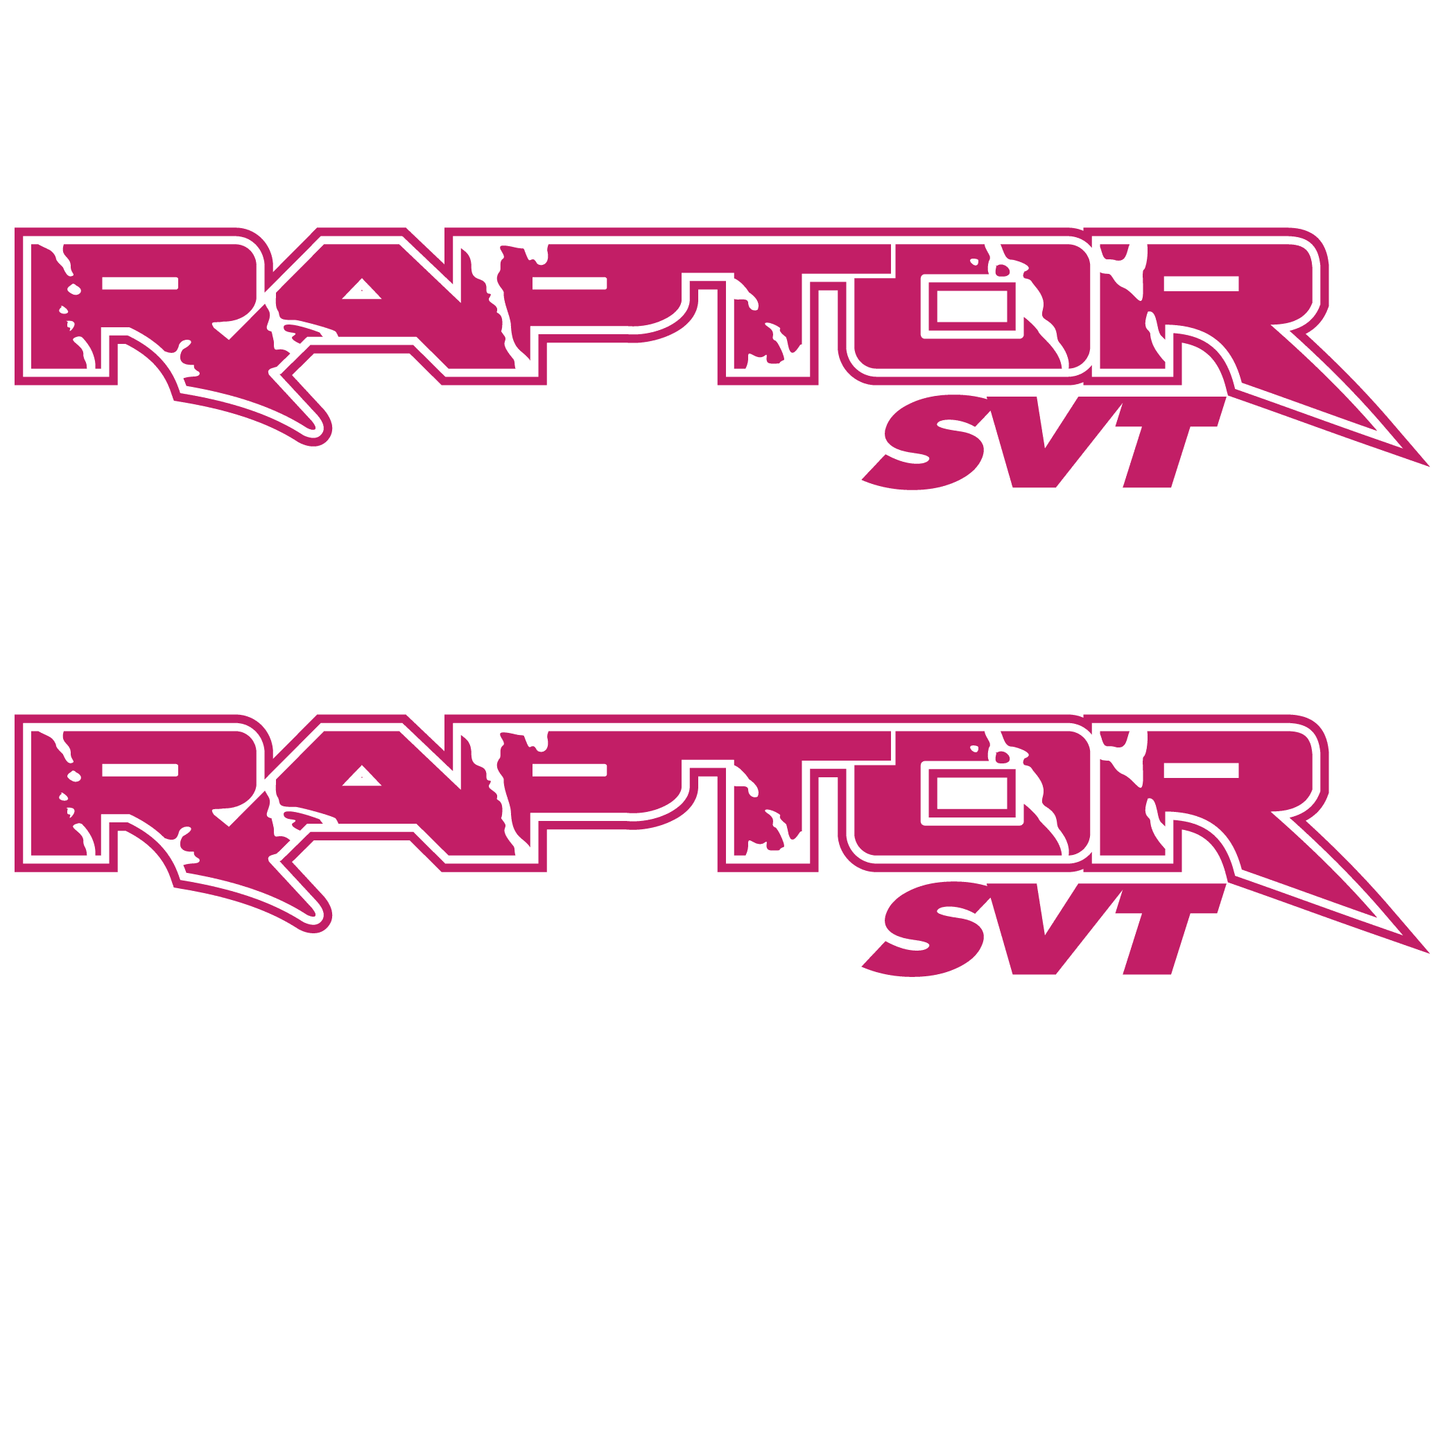 Shop Vinyl Design F-150 Raptor SVT Replacement Bedside Decals #010 Vehicle Decal Pink Gloss Shop Vinyl Design decals stickers